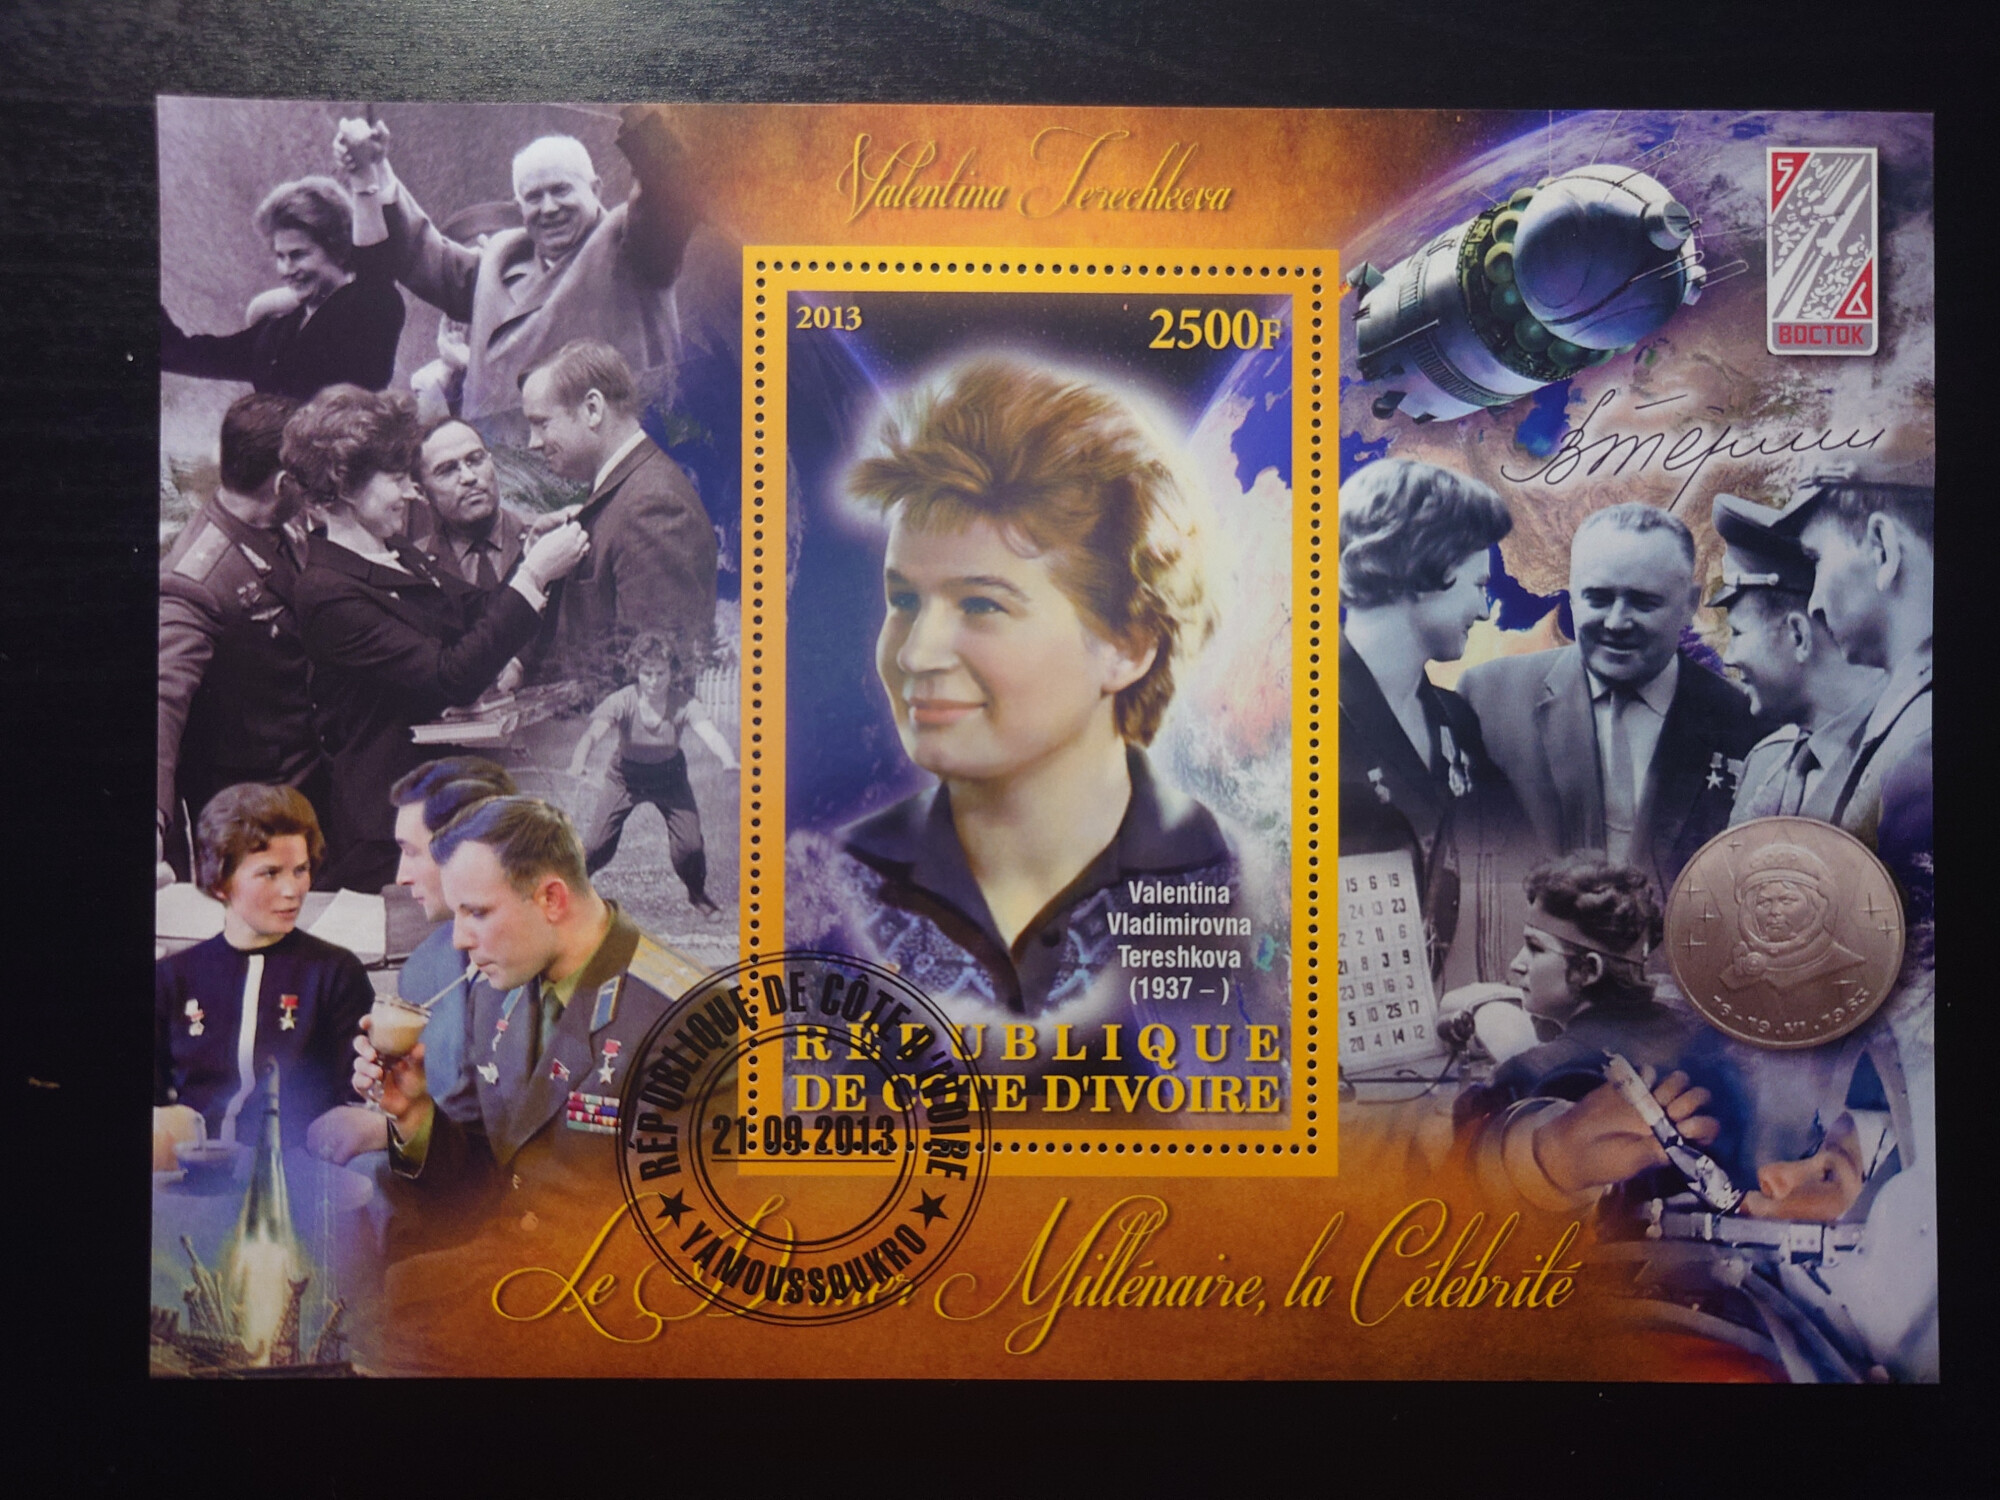   Valentina Tereshkova (2013) (2500F)